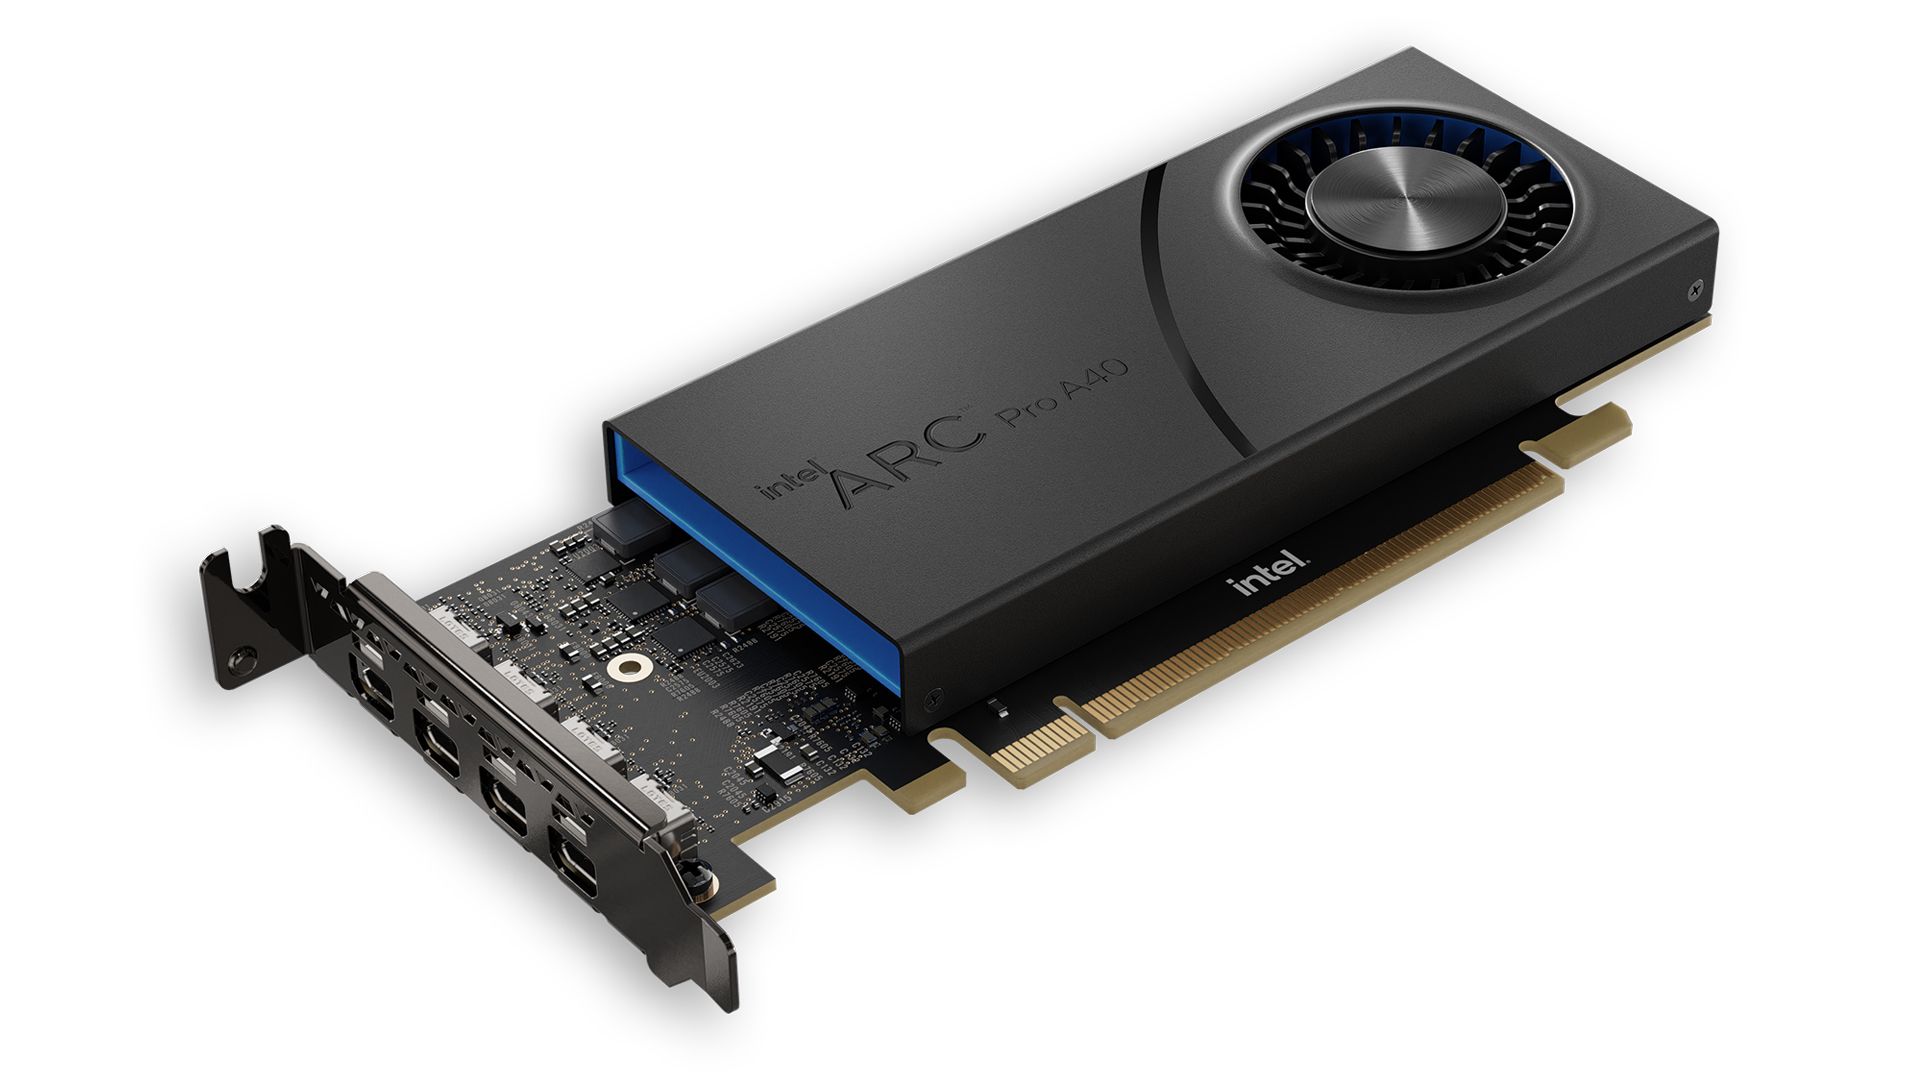 Intel unveils Arc Pro GPUs for workstations